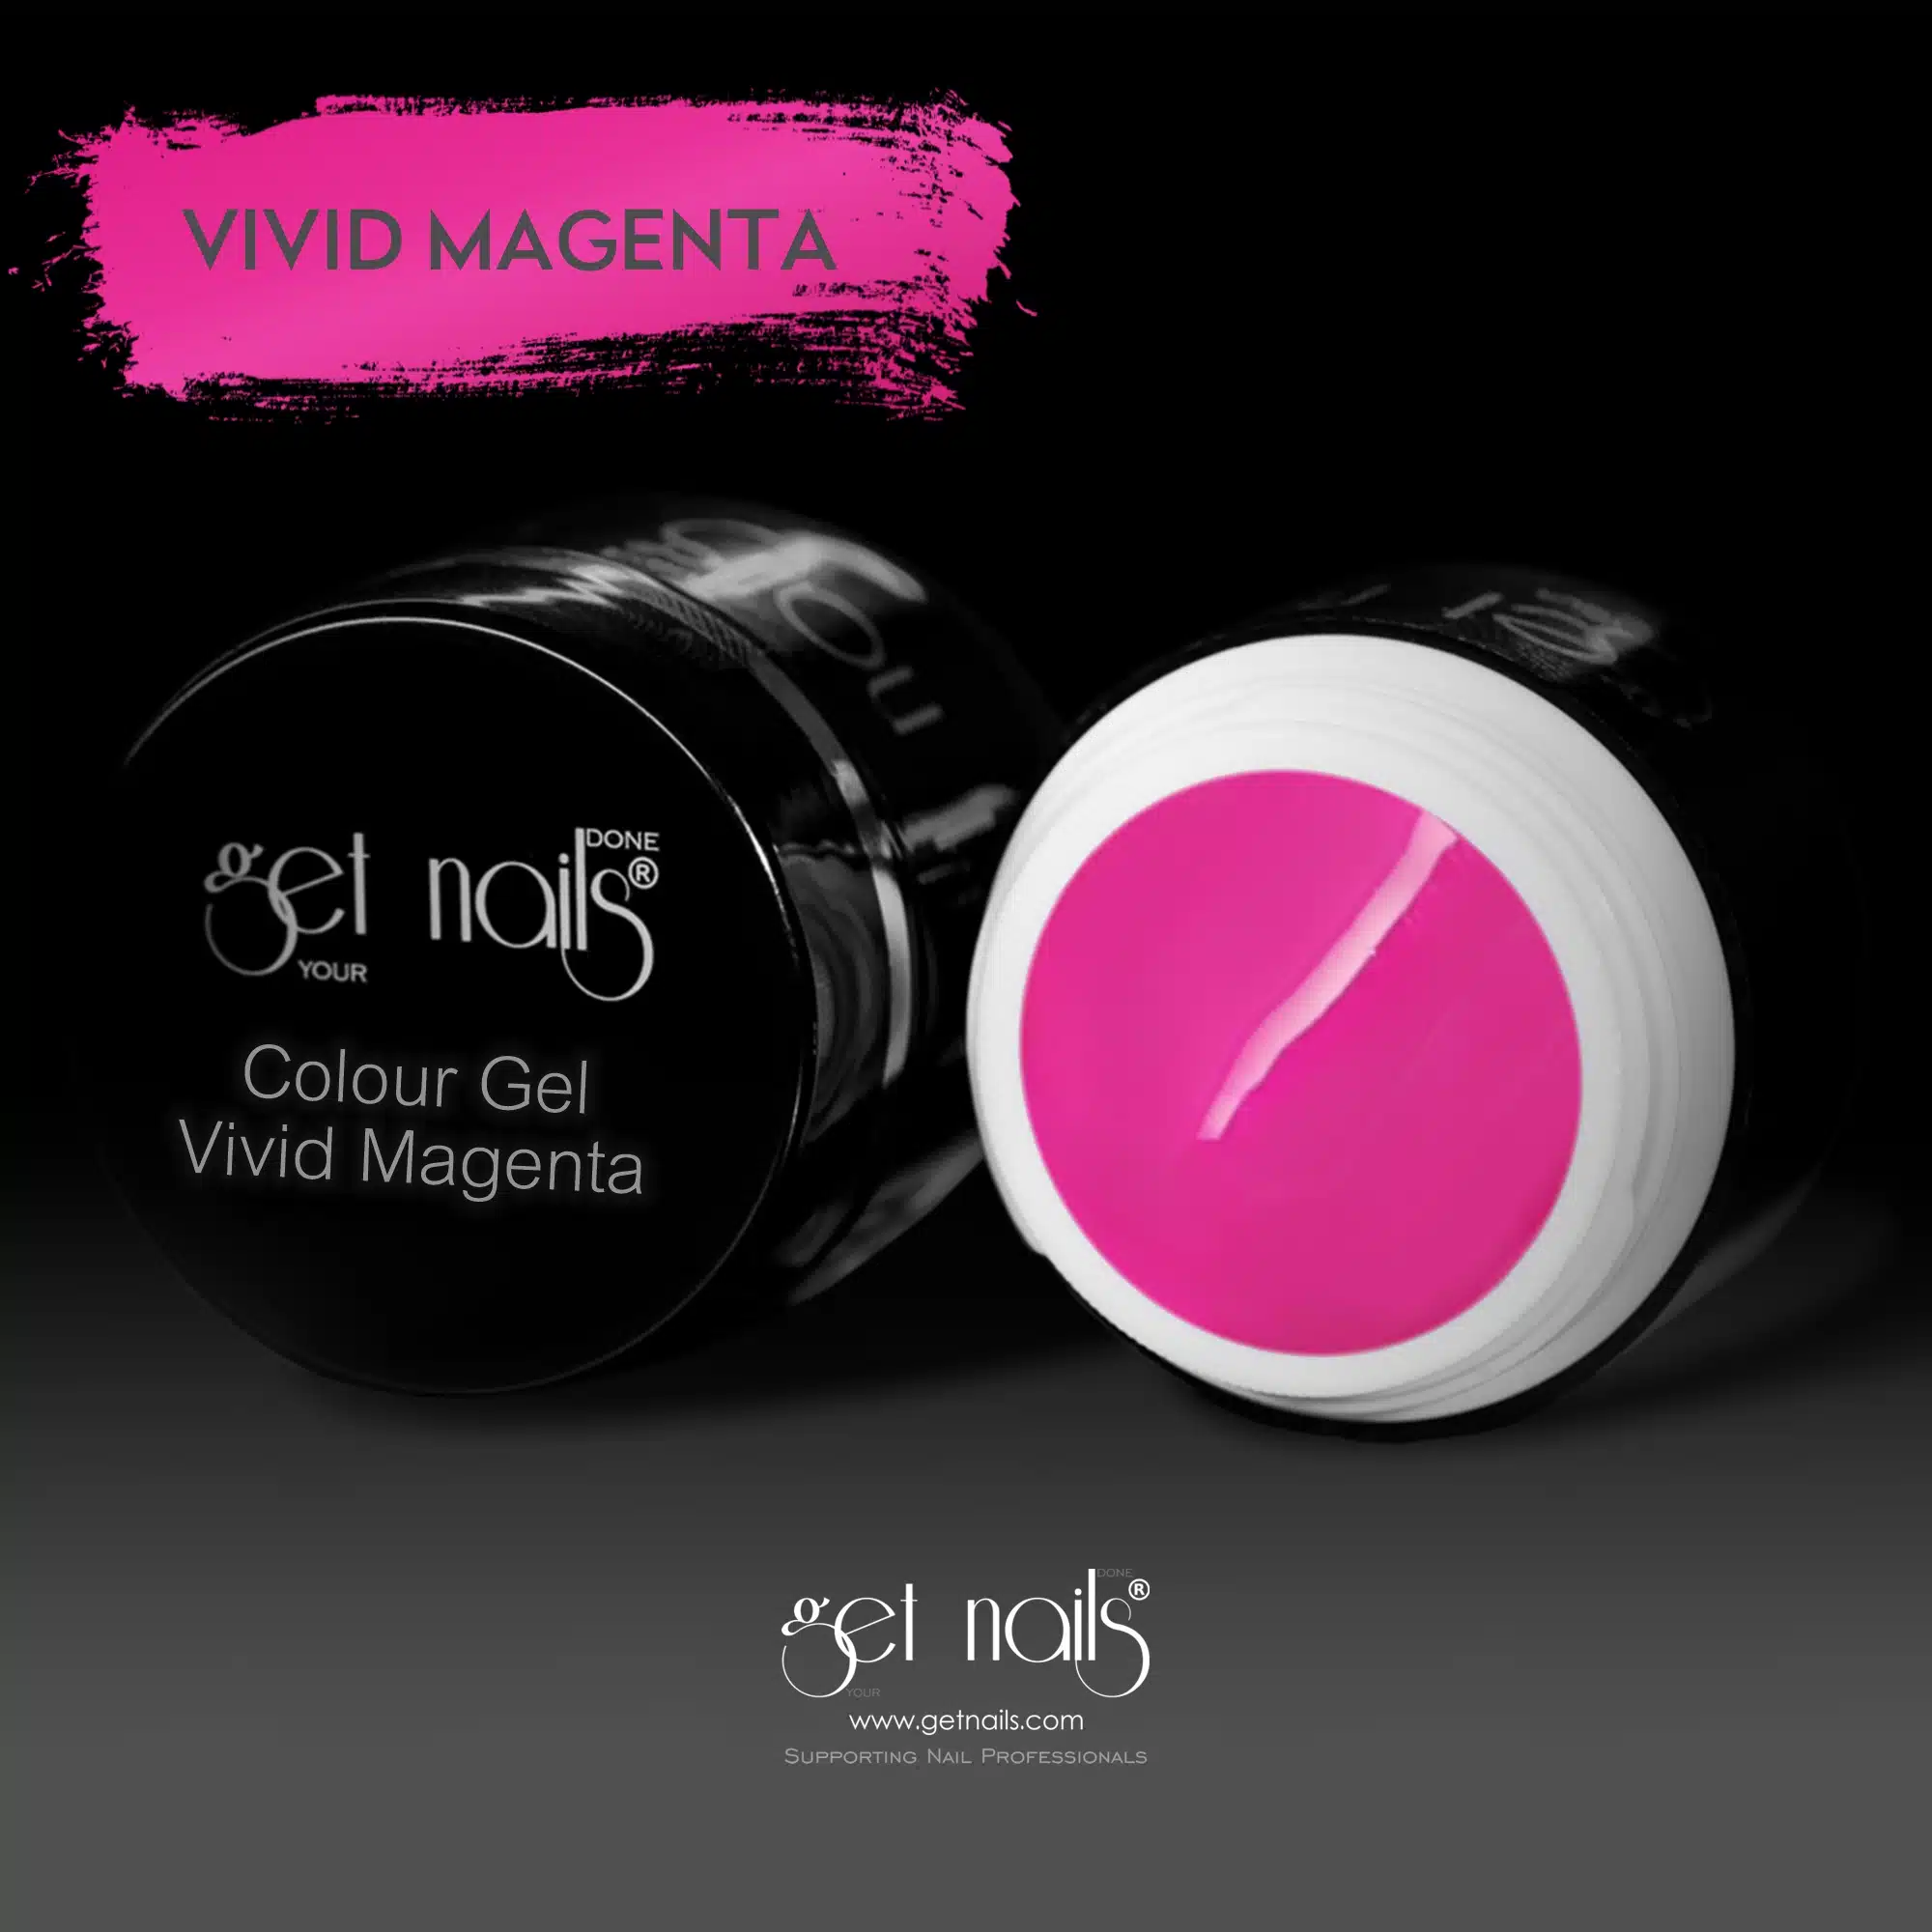 Get Nails Austria - Colour Gel Vivid Magenta 5g